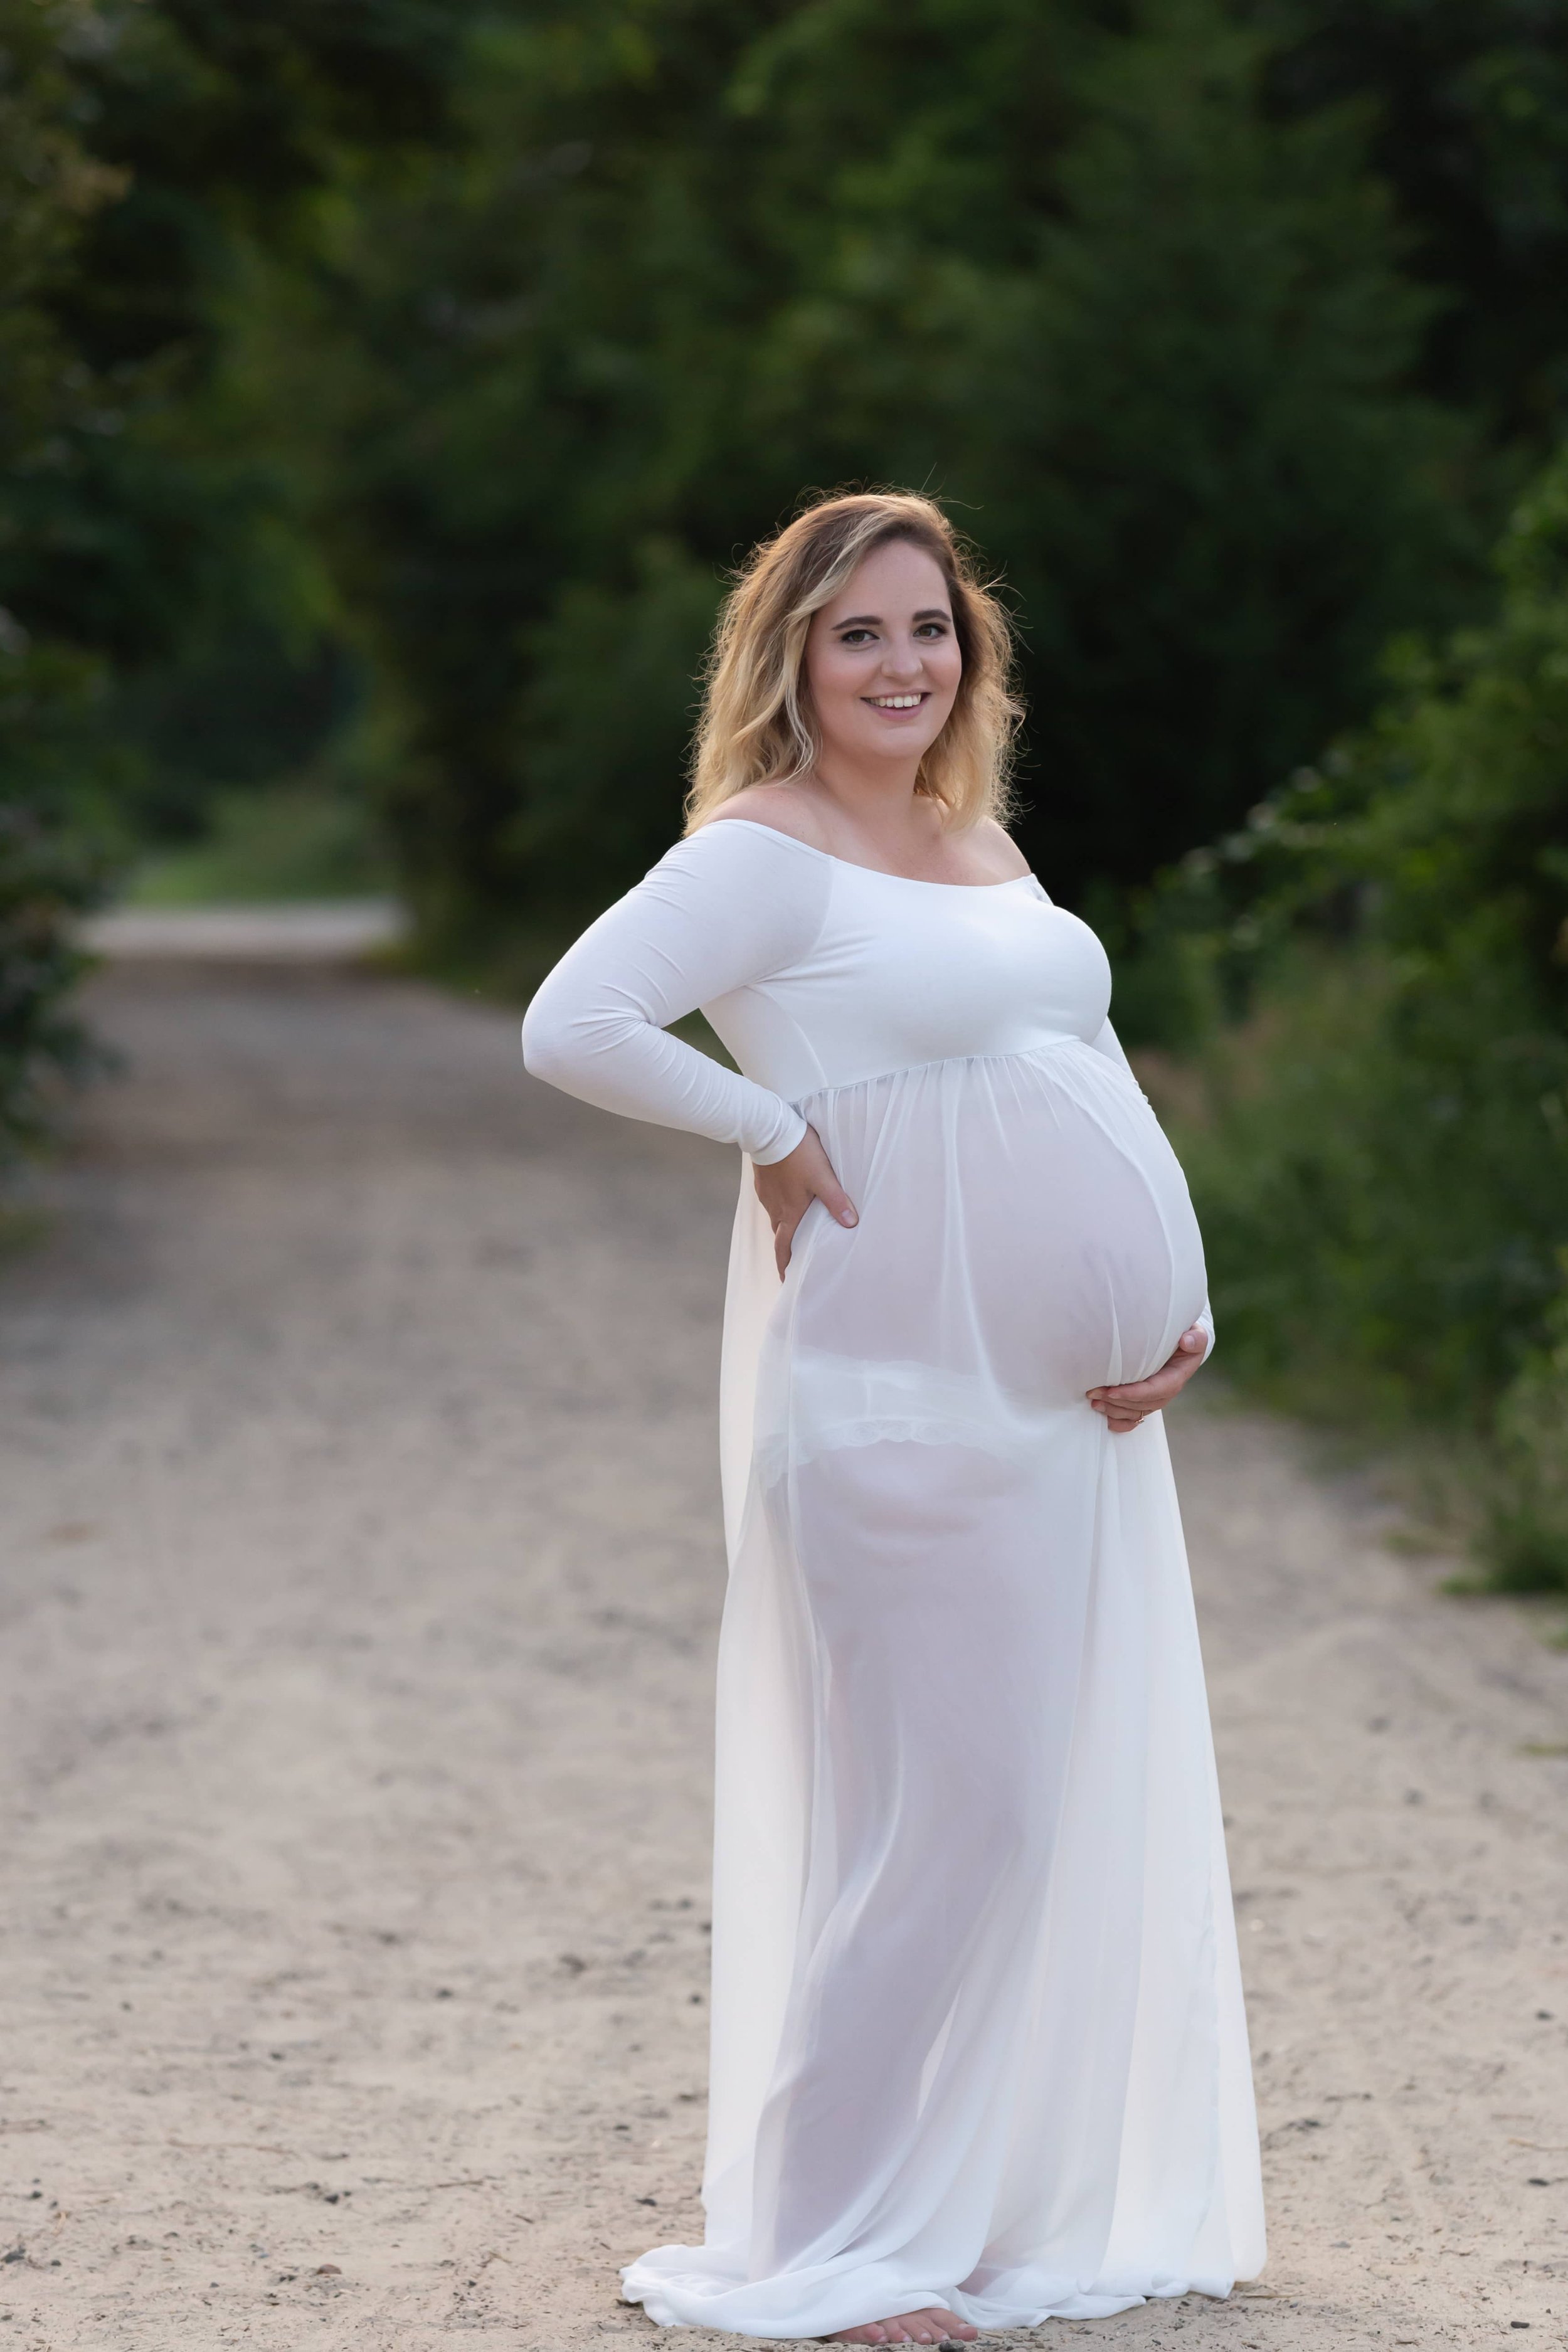 taylor-hamm-maternity-2021-20-min.jpg